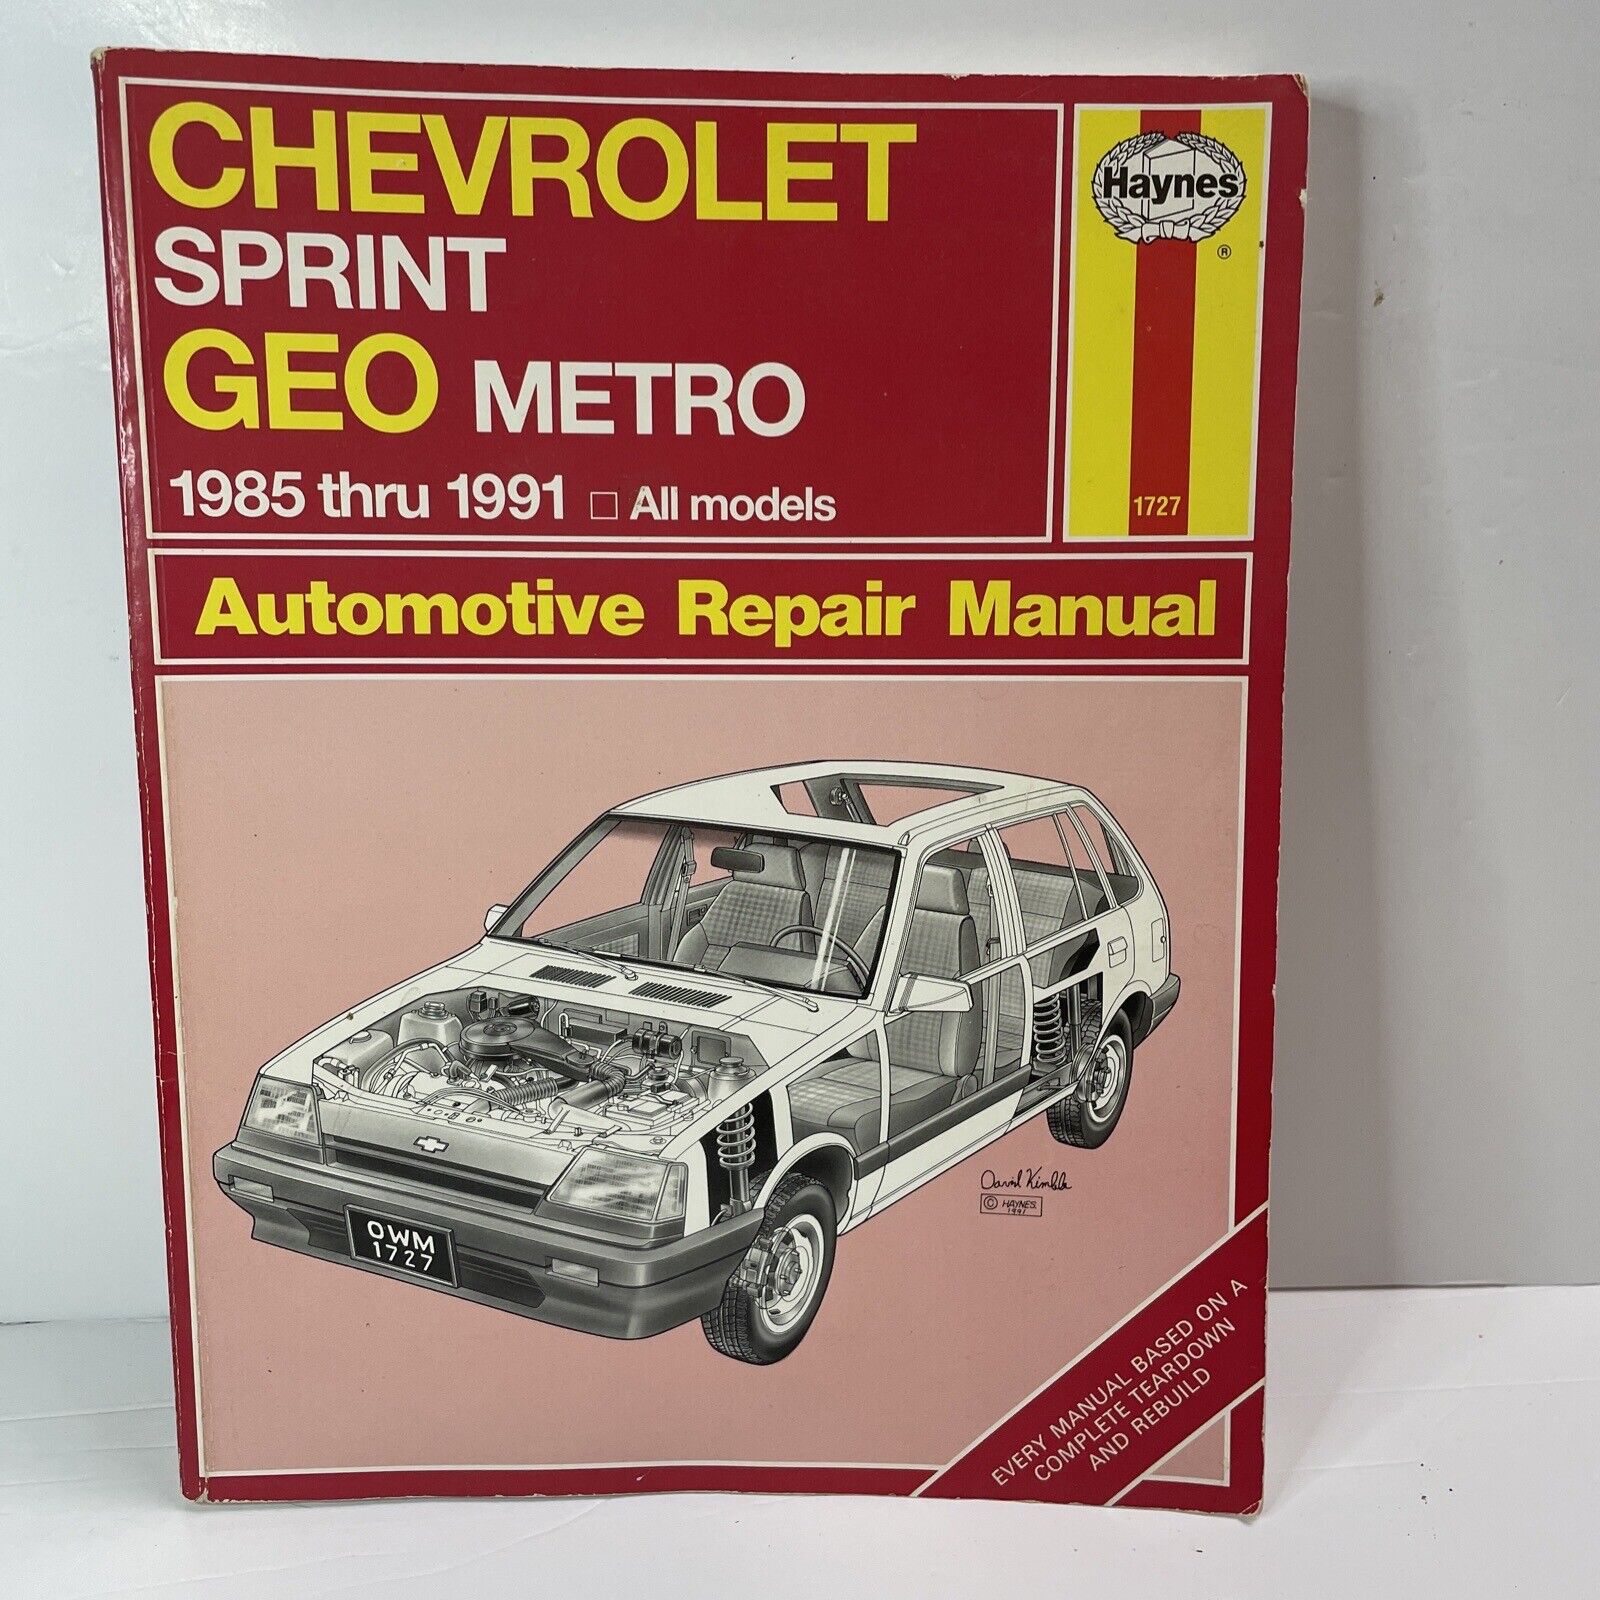 Haynes Chevrolet Sprint, Geo Metro 1985 Thru 1991 Repair Manual. #1727